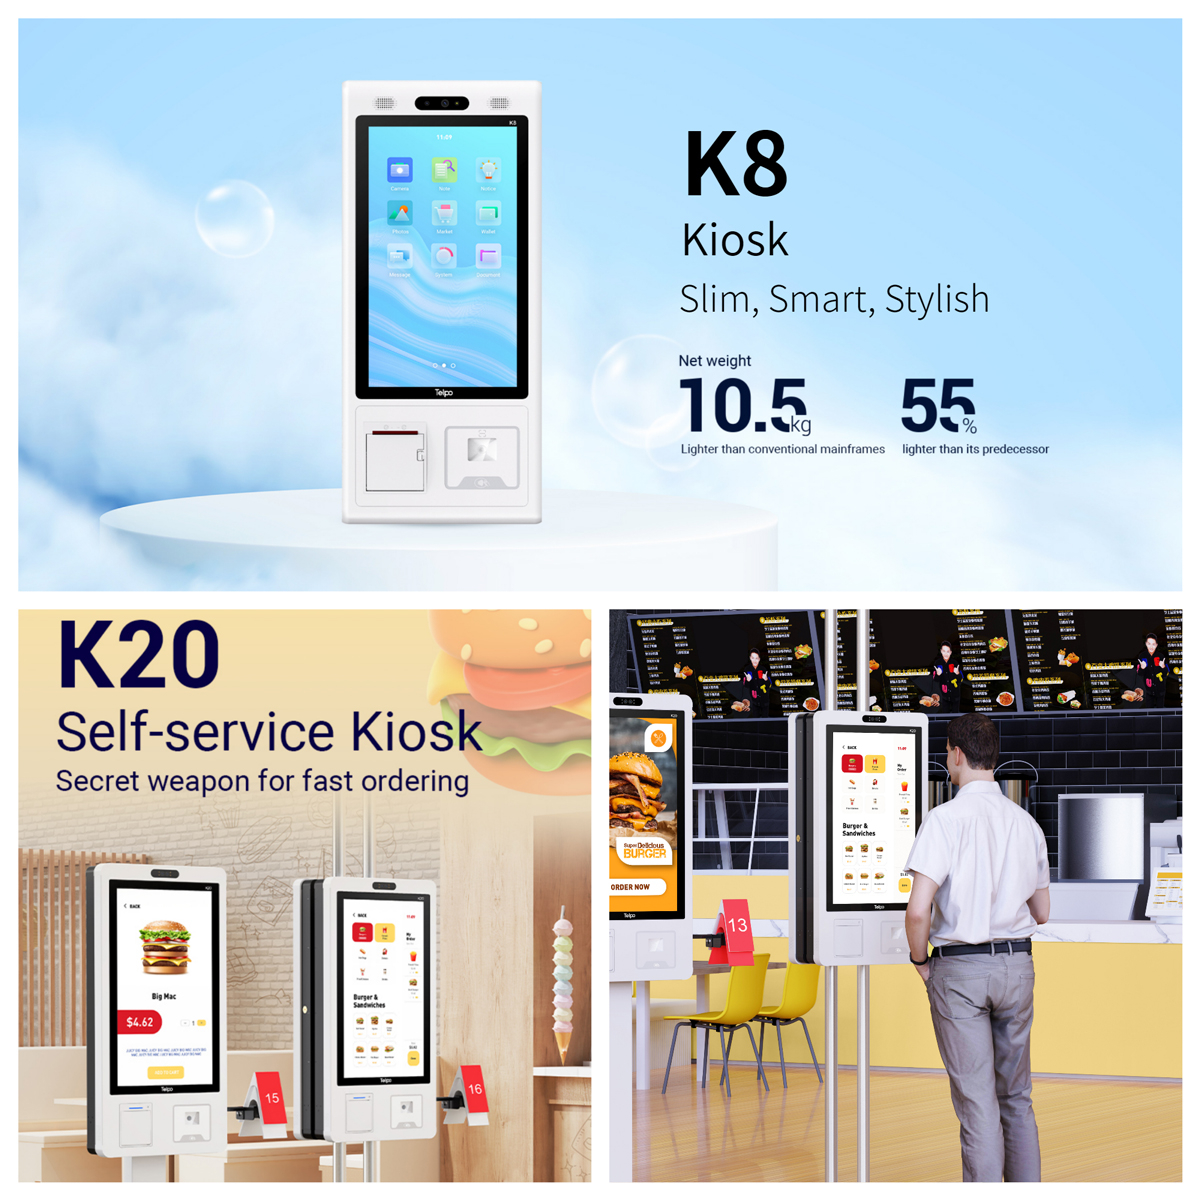 Self-service Kiosk